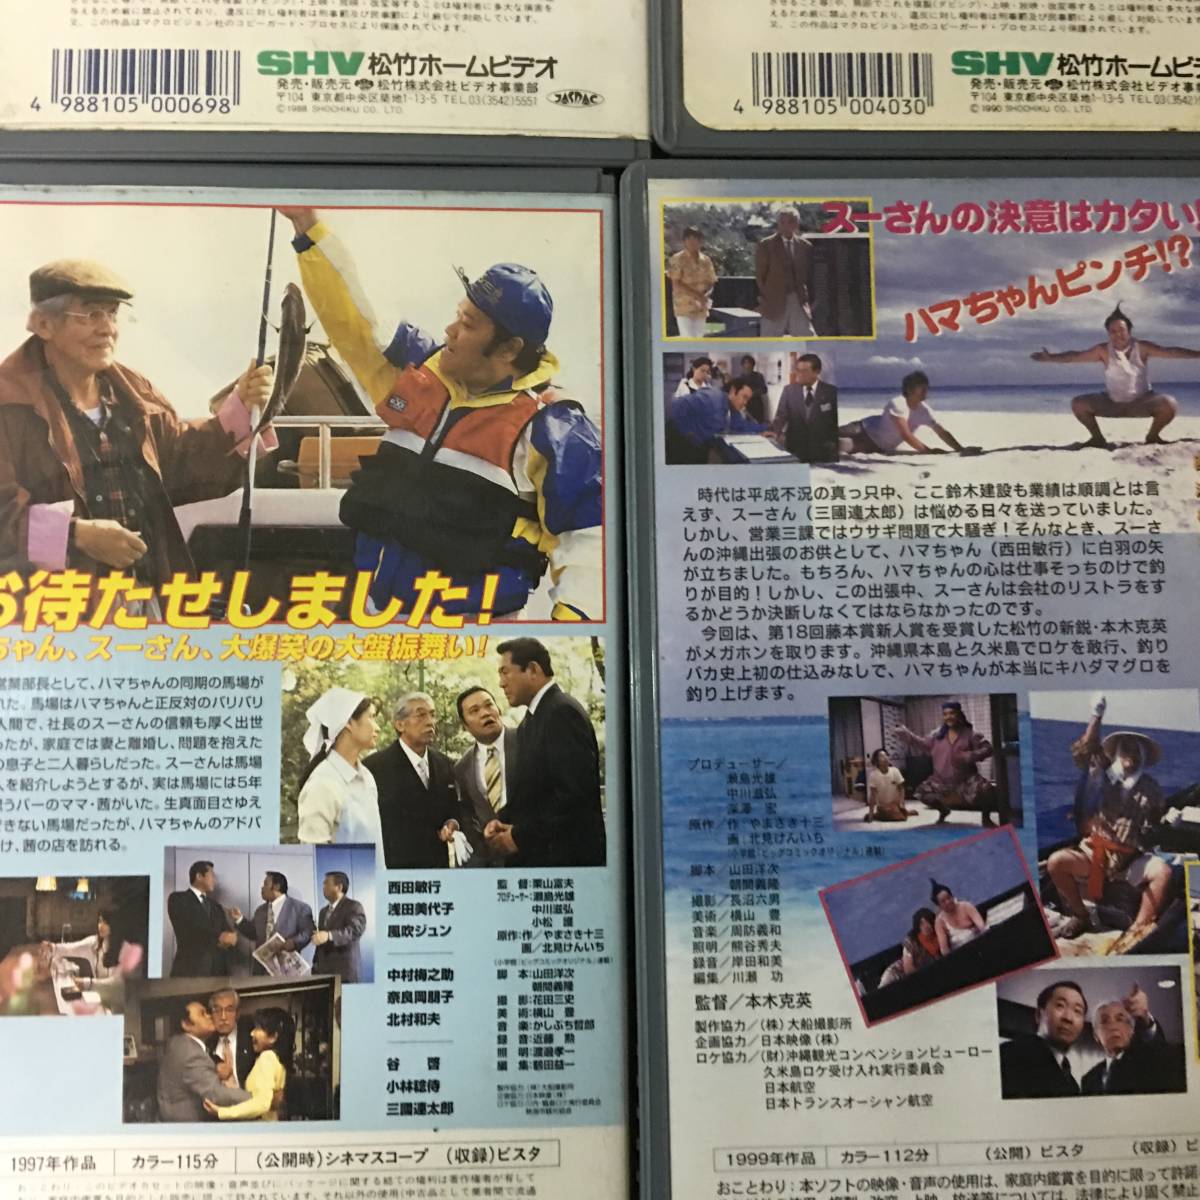  prompt decision VHS video * fishing baka day magazine *1.2.9.11 volume * west rice field . line * Ishida Eri 